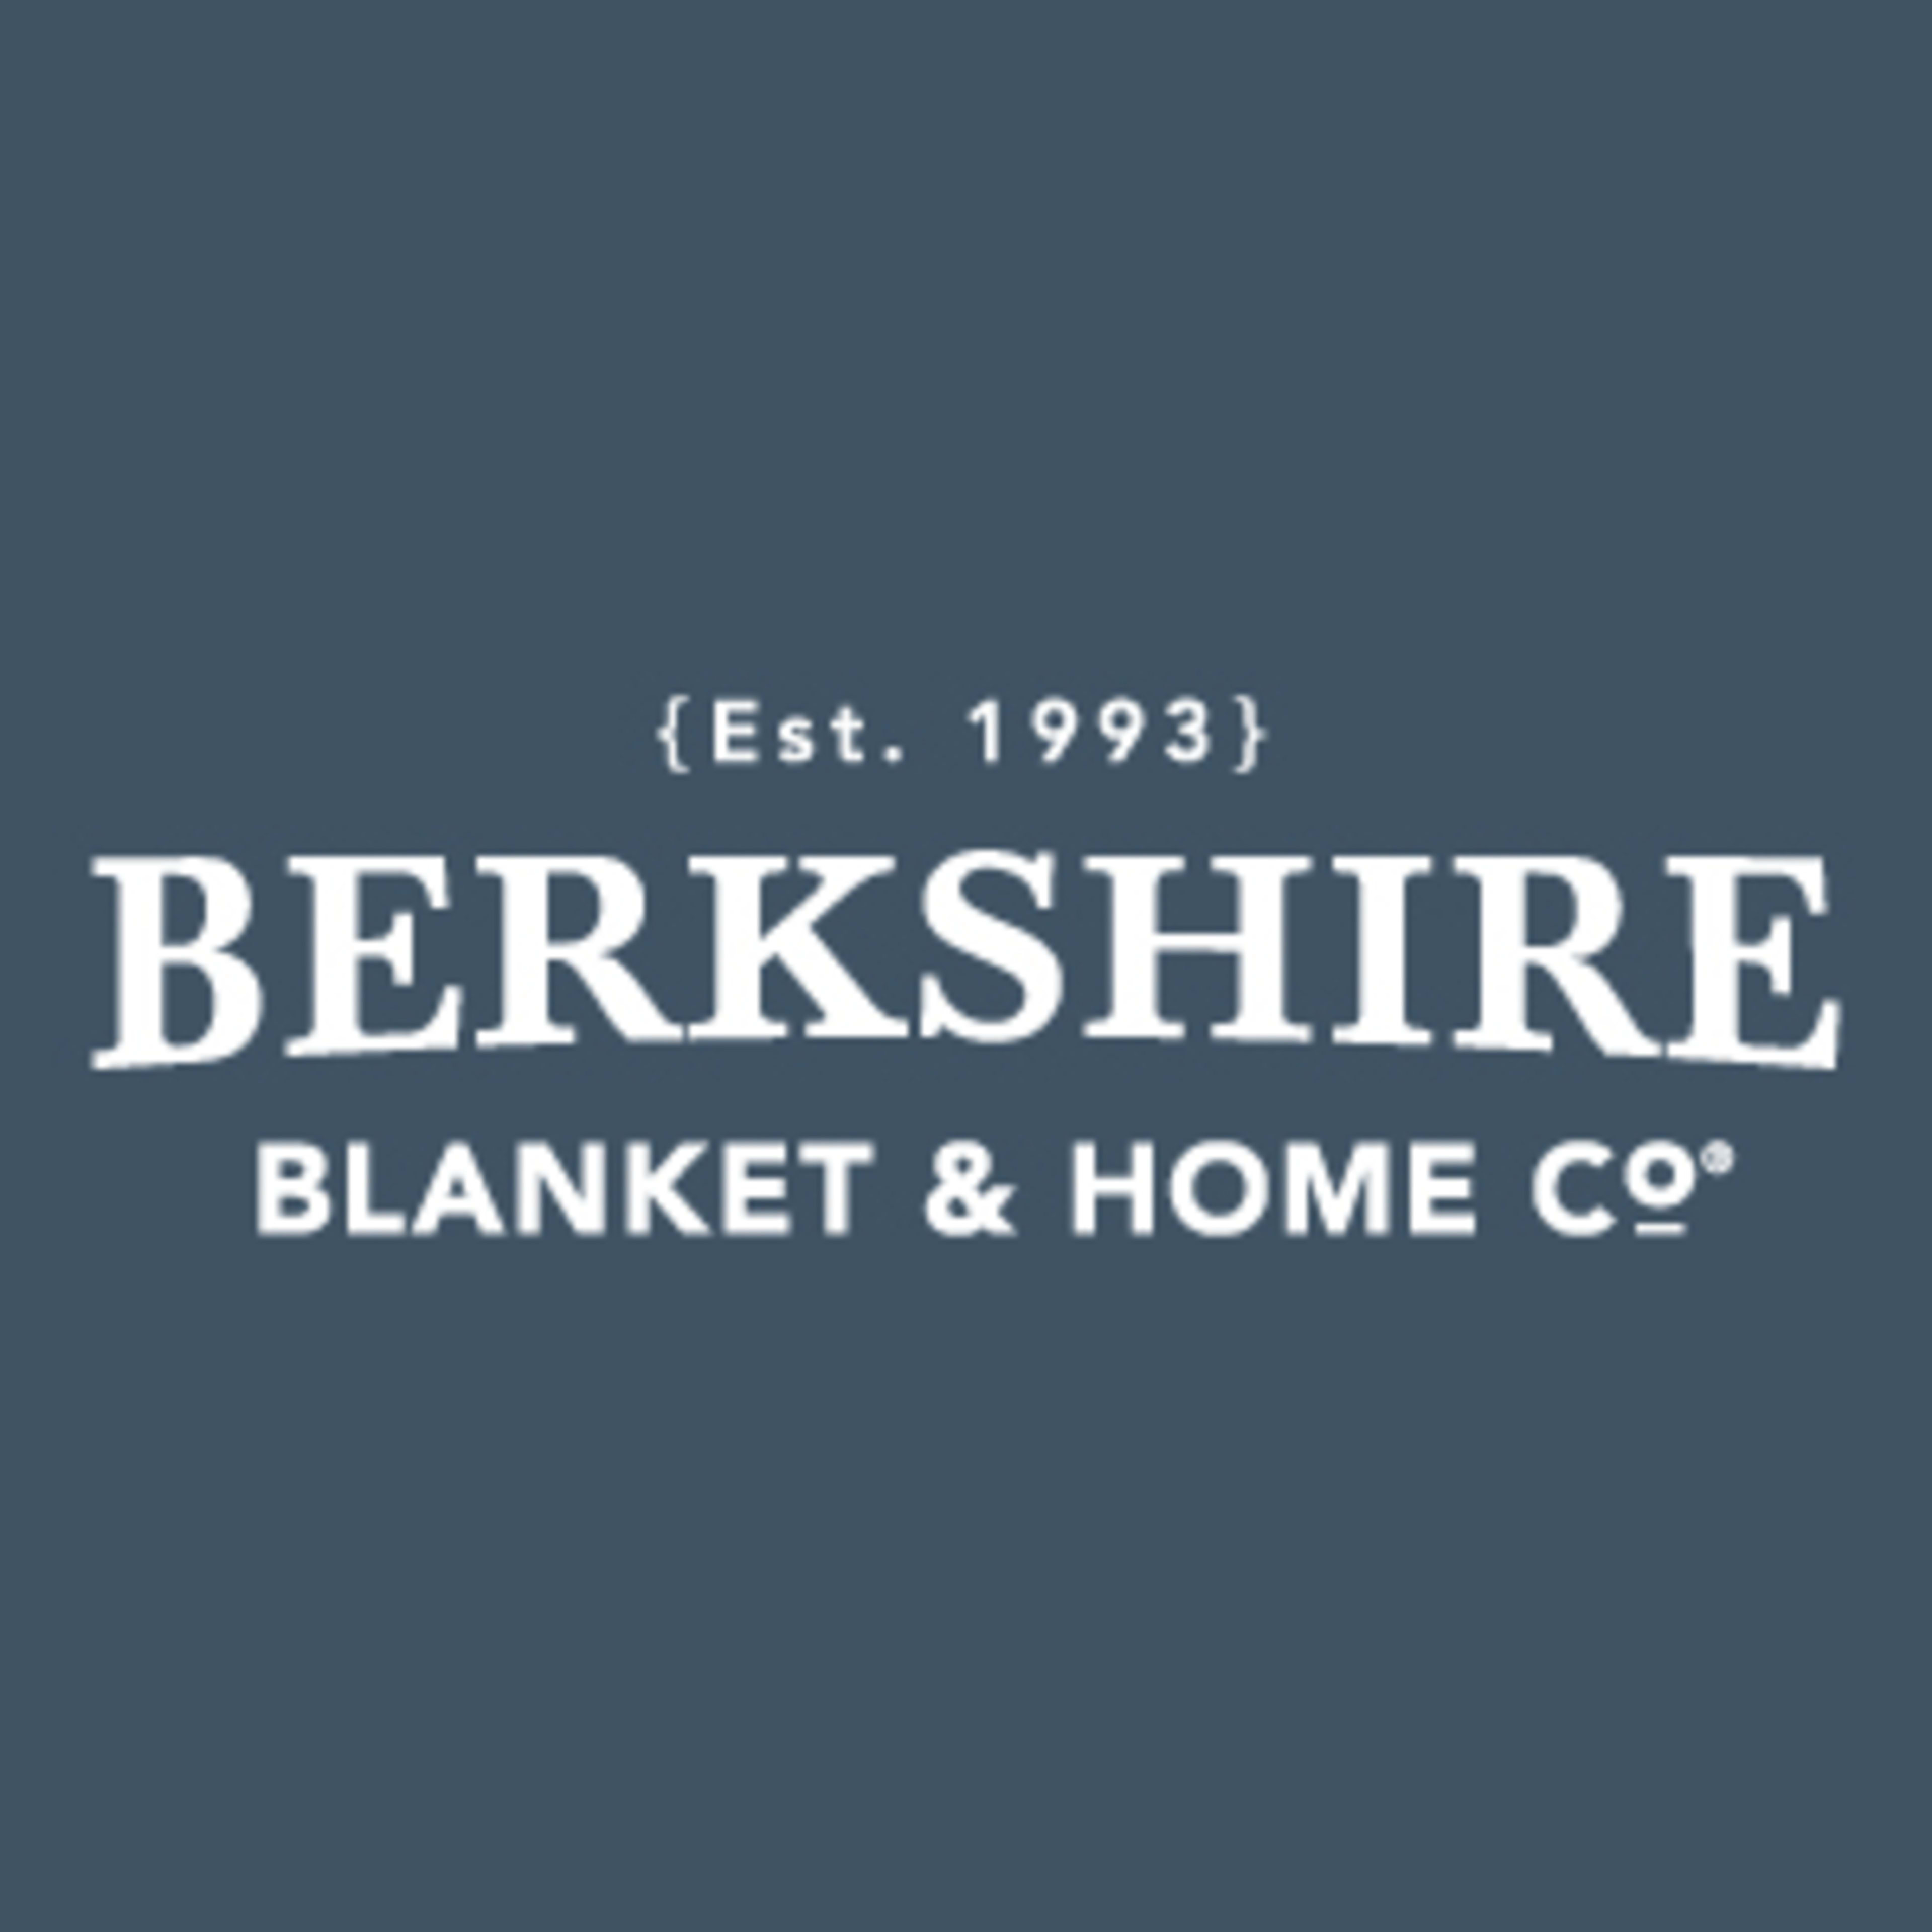 Berkshire BlanketCode